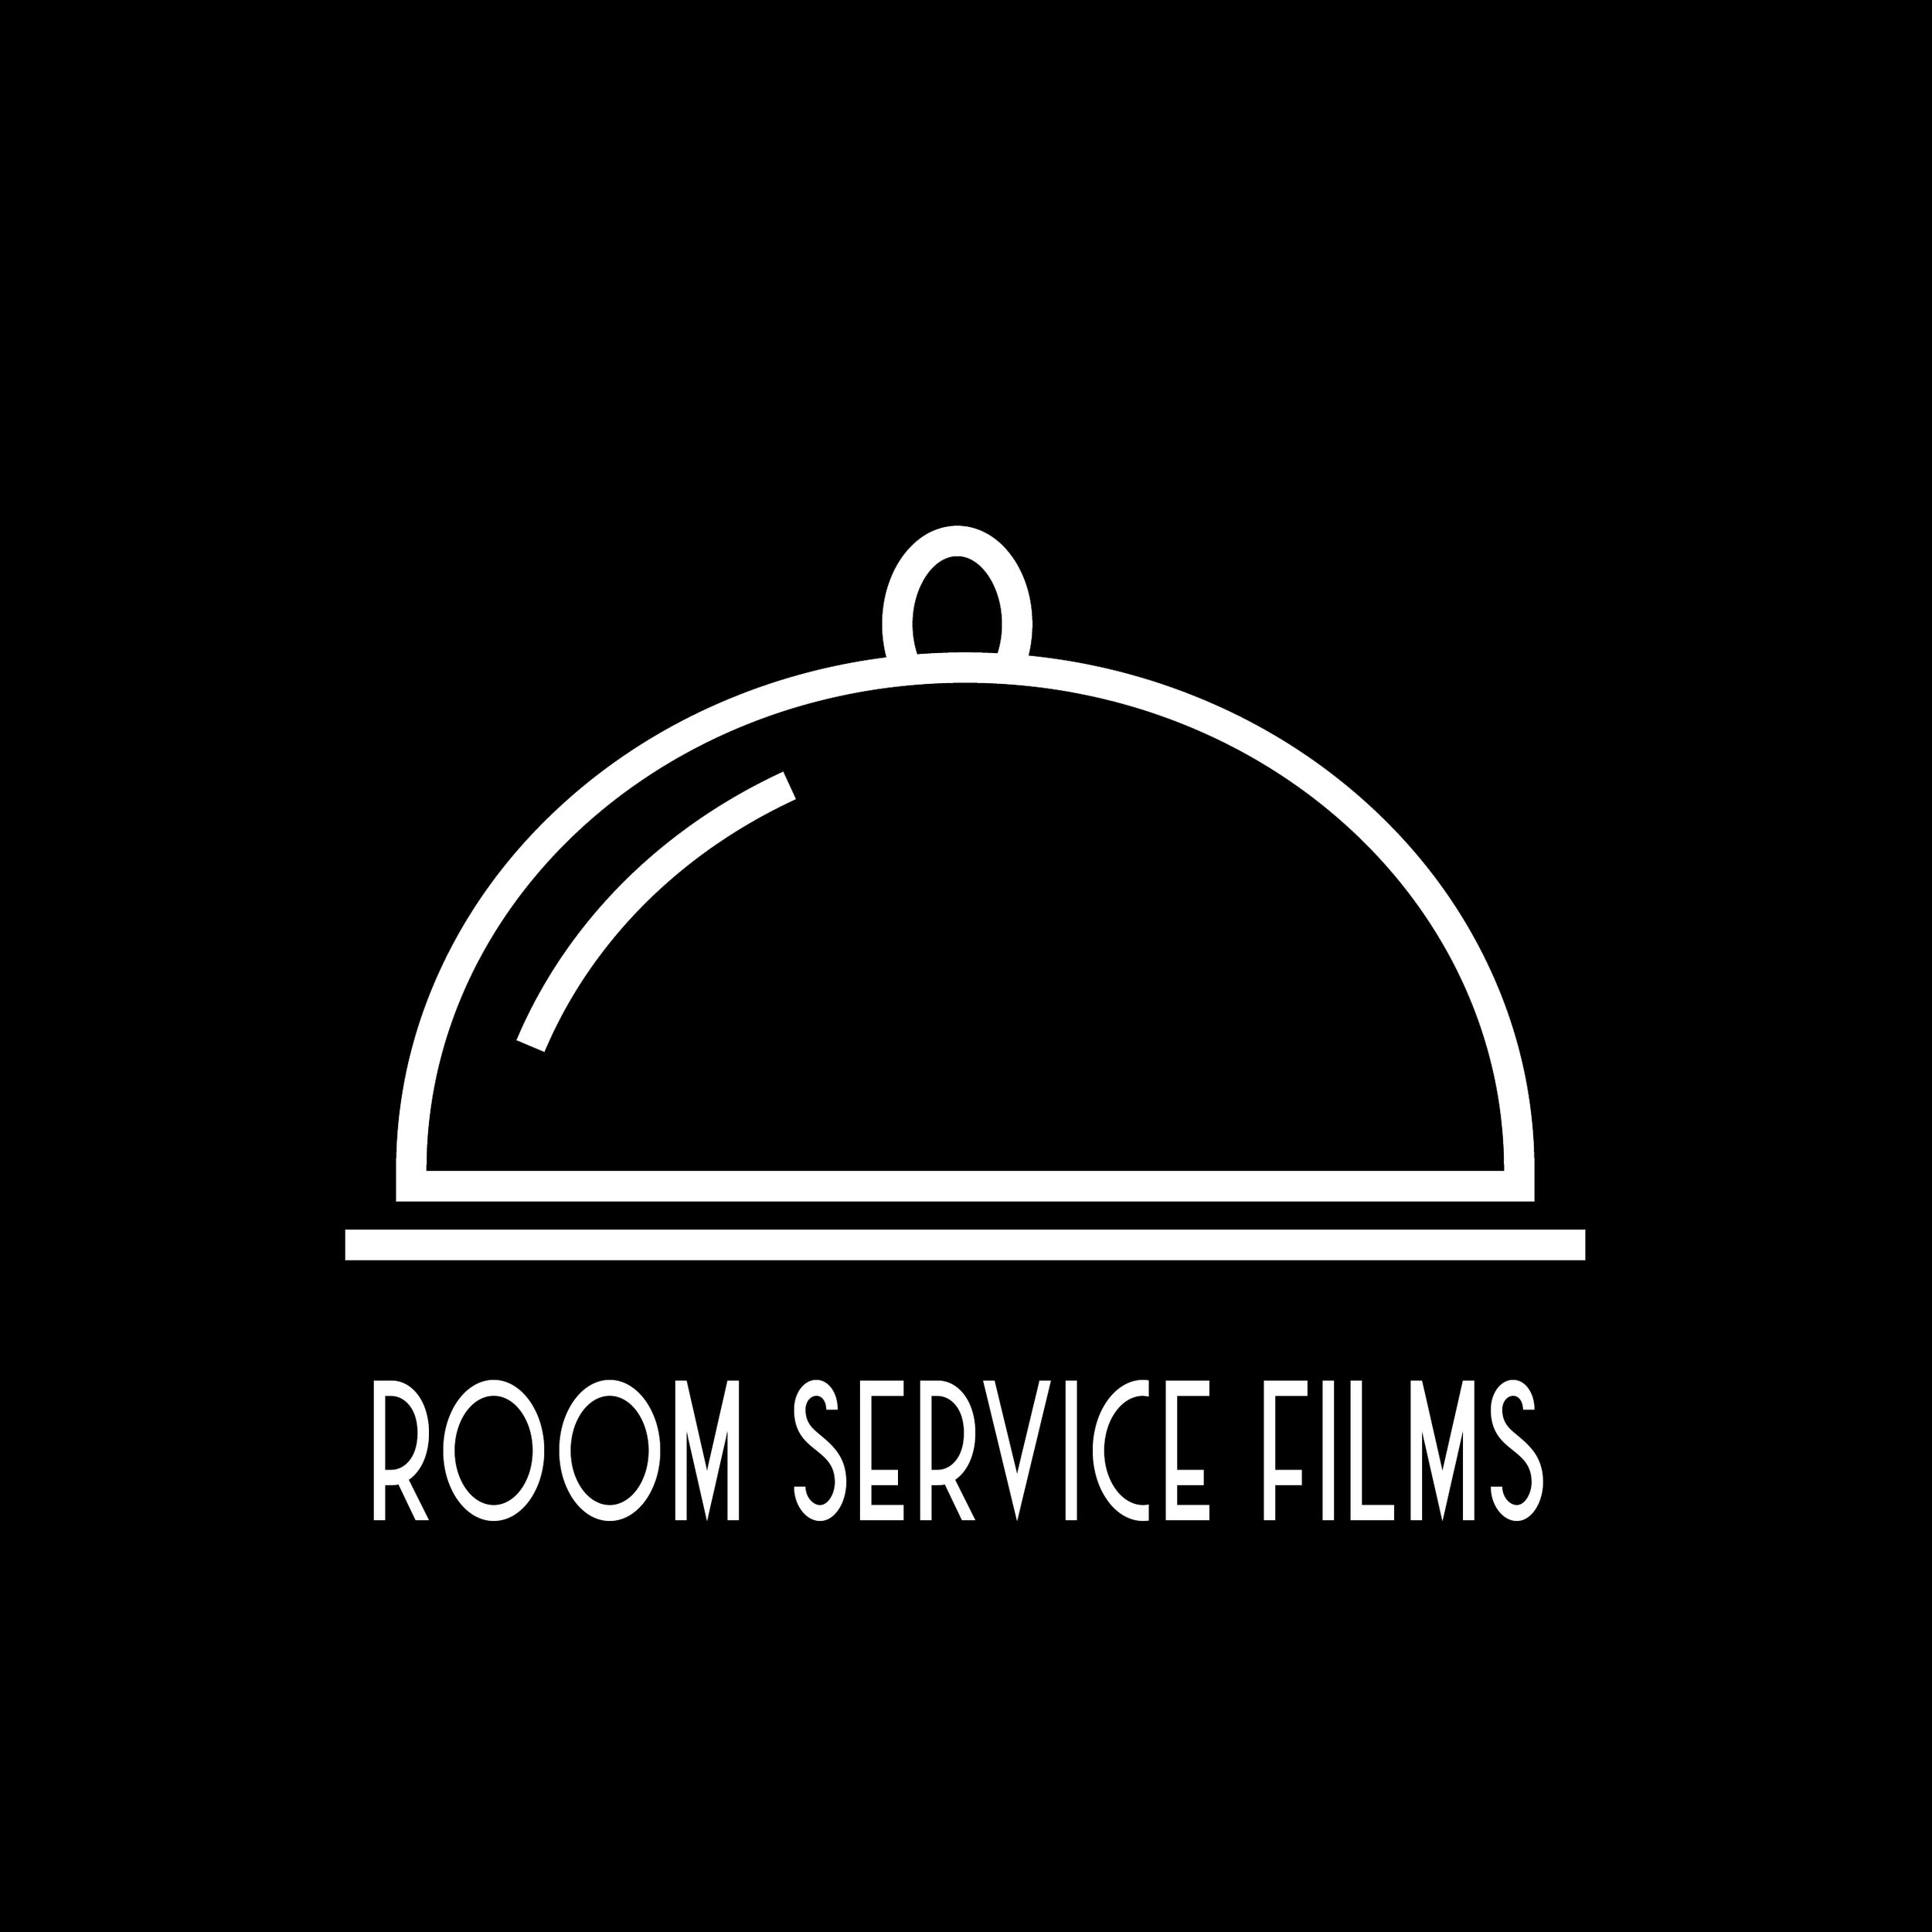 ROOM SERVICE FILMS